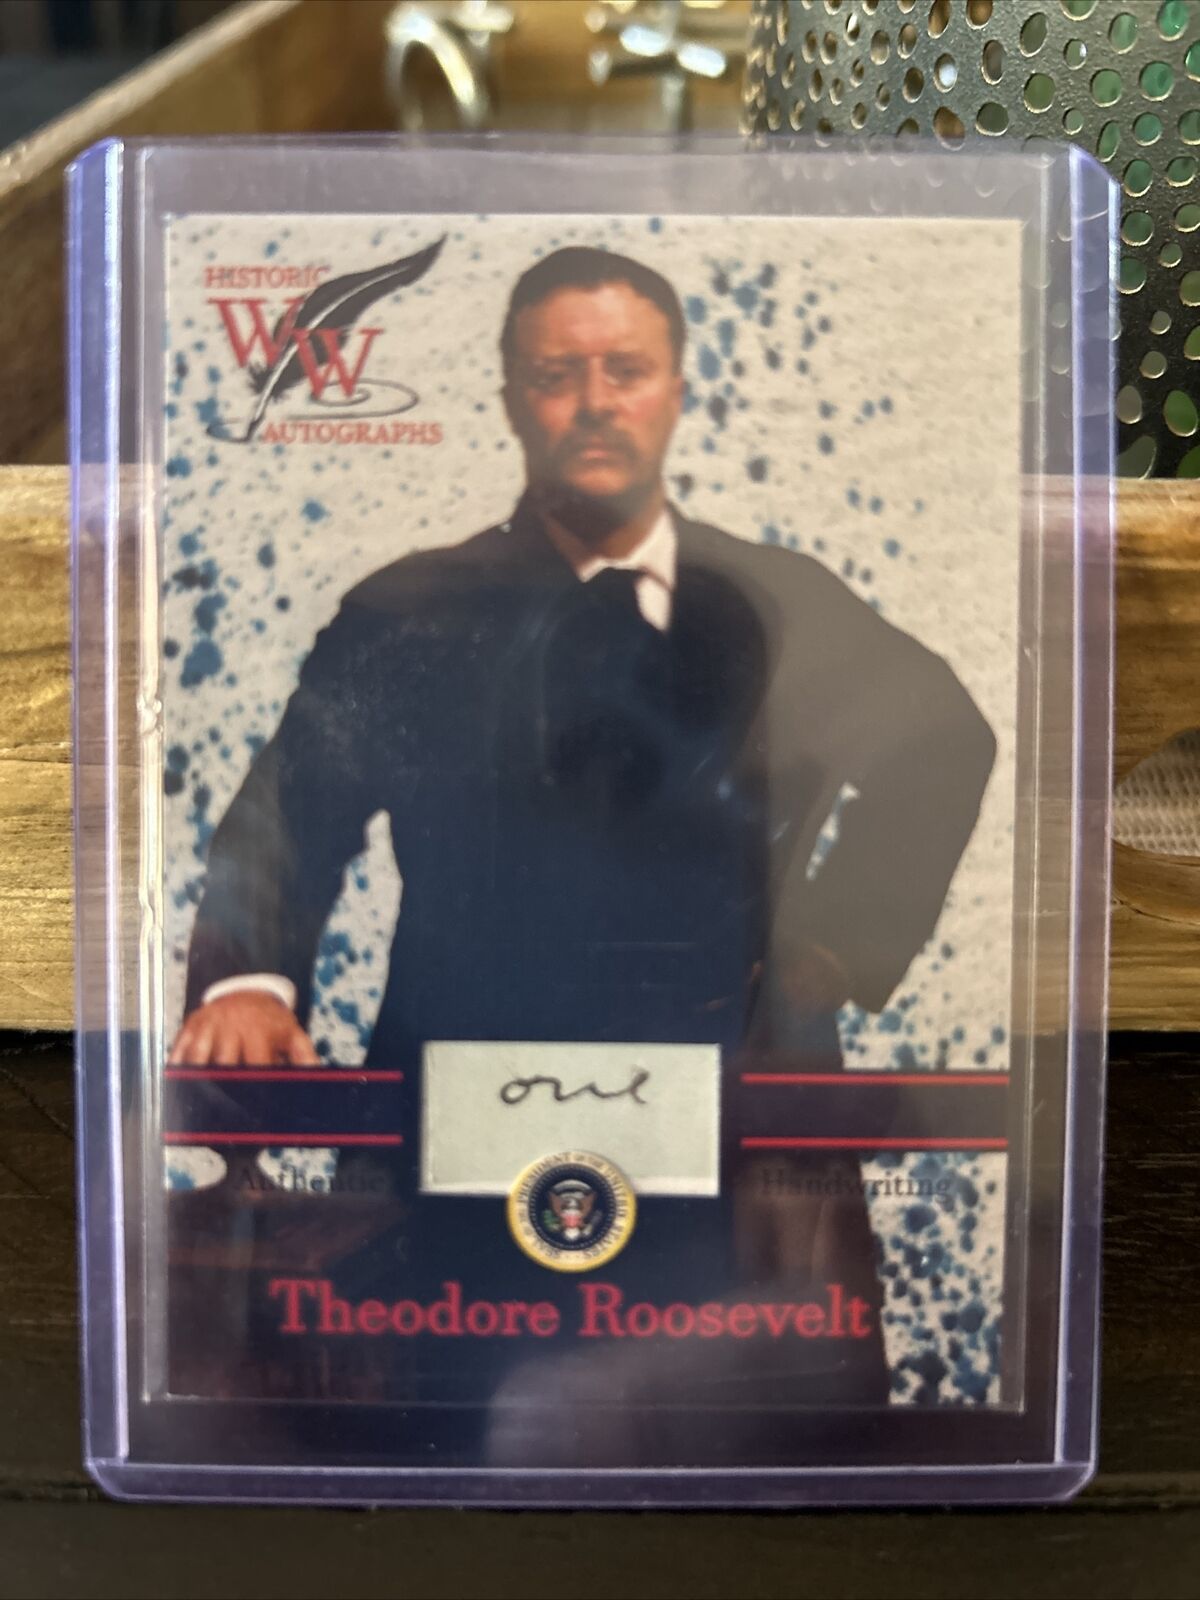 2021 POTUS Historic Autographs Word Theodore Roosevelt